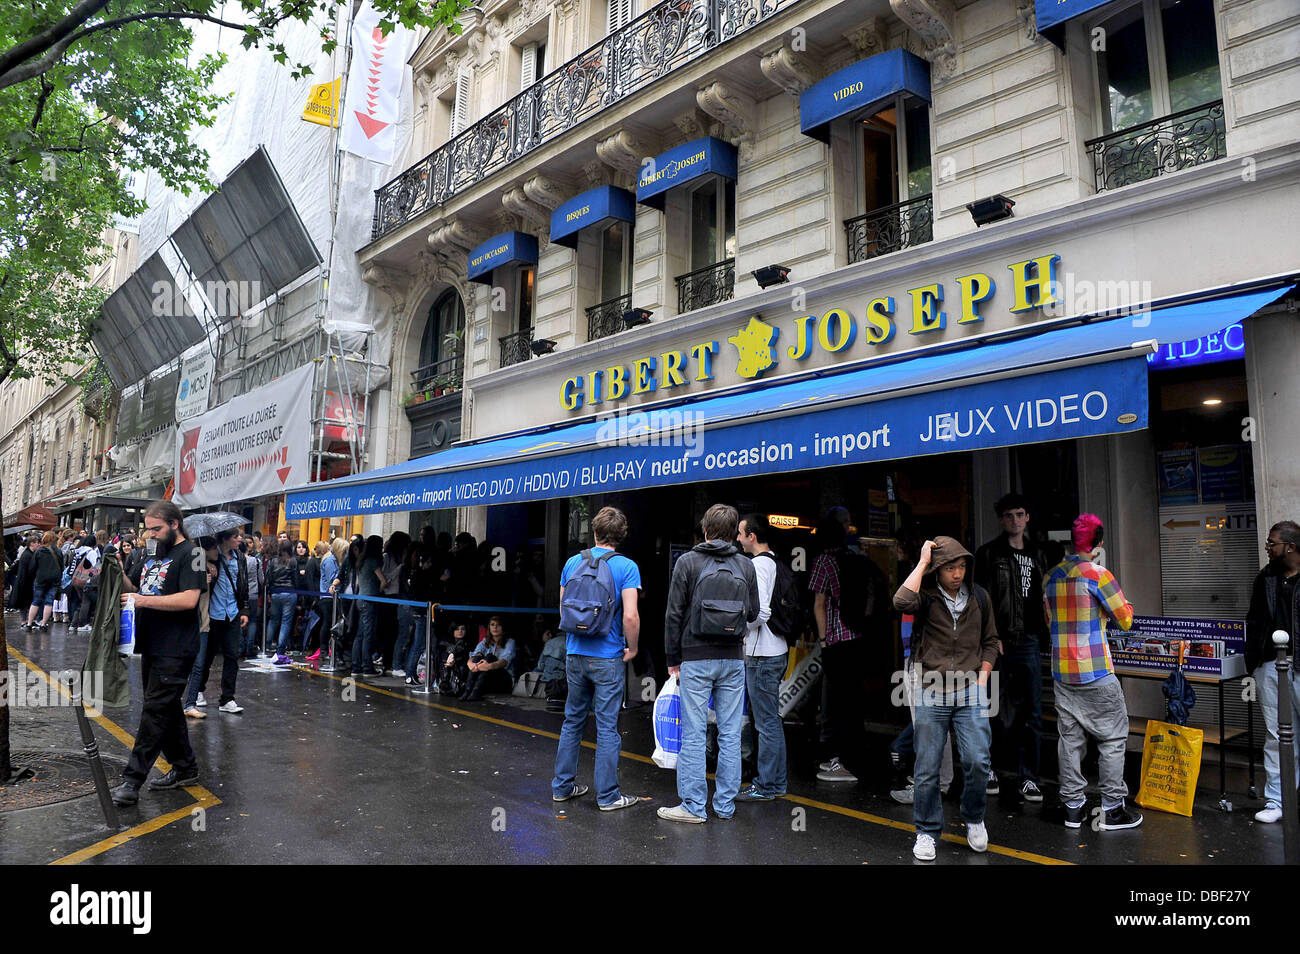 General view of Gibert Joseph store Paris, France - 07.06.11 Stock Photo -  Alamy